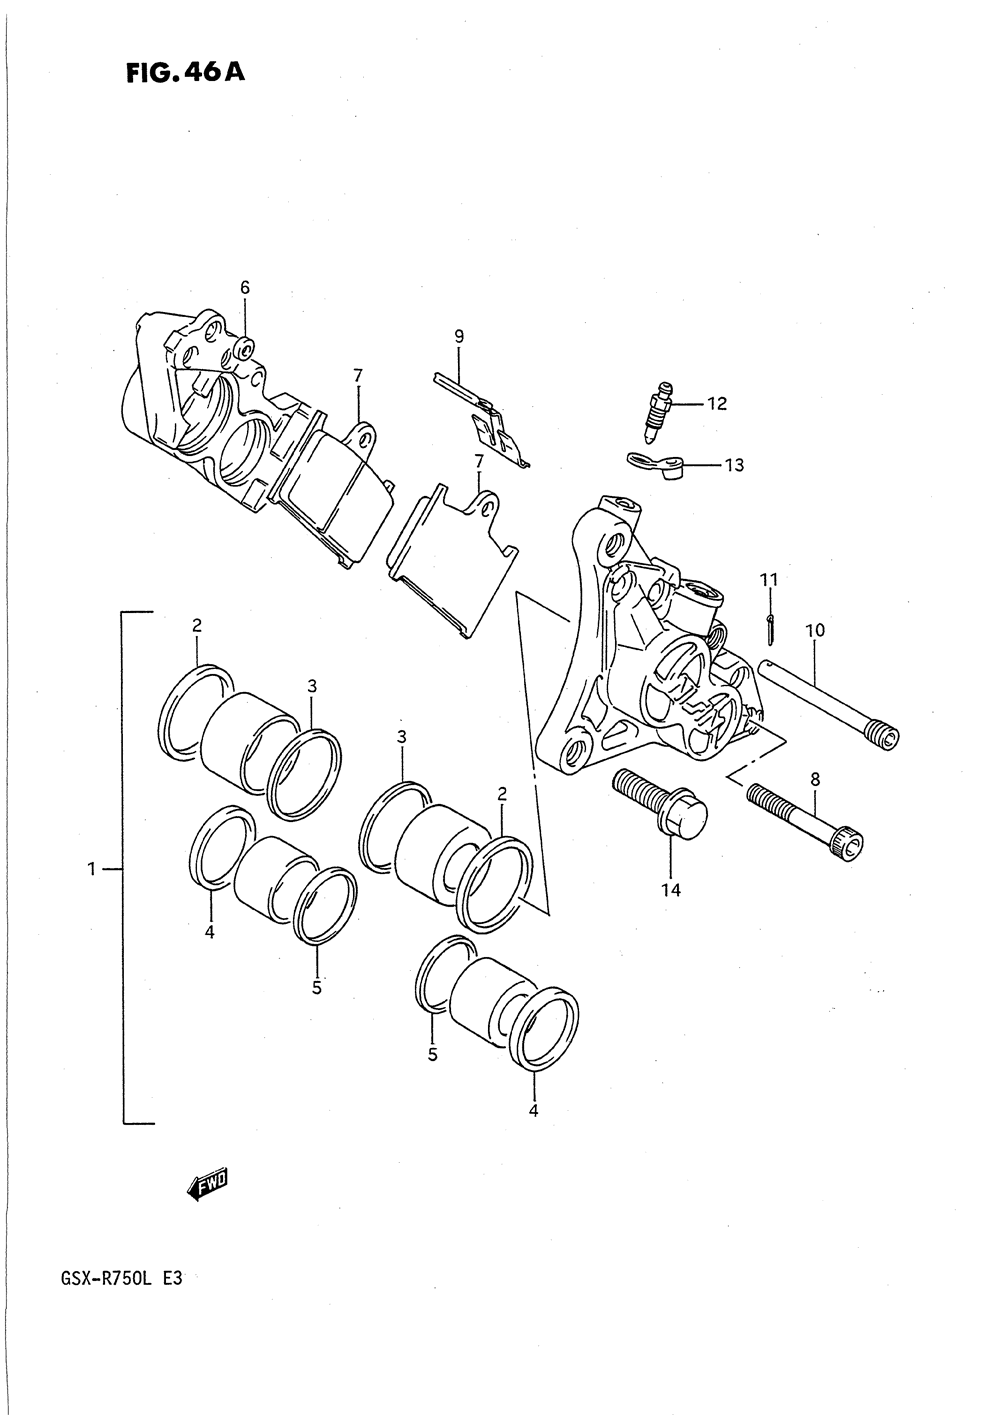 Front calipers (model l)